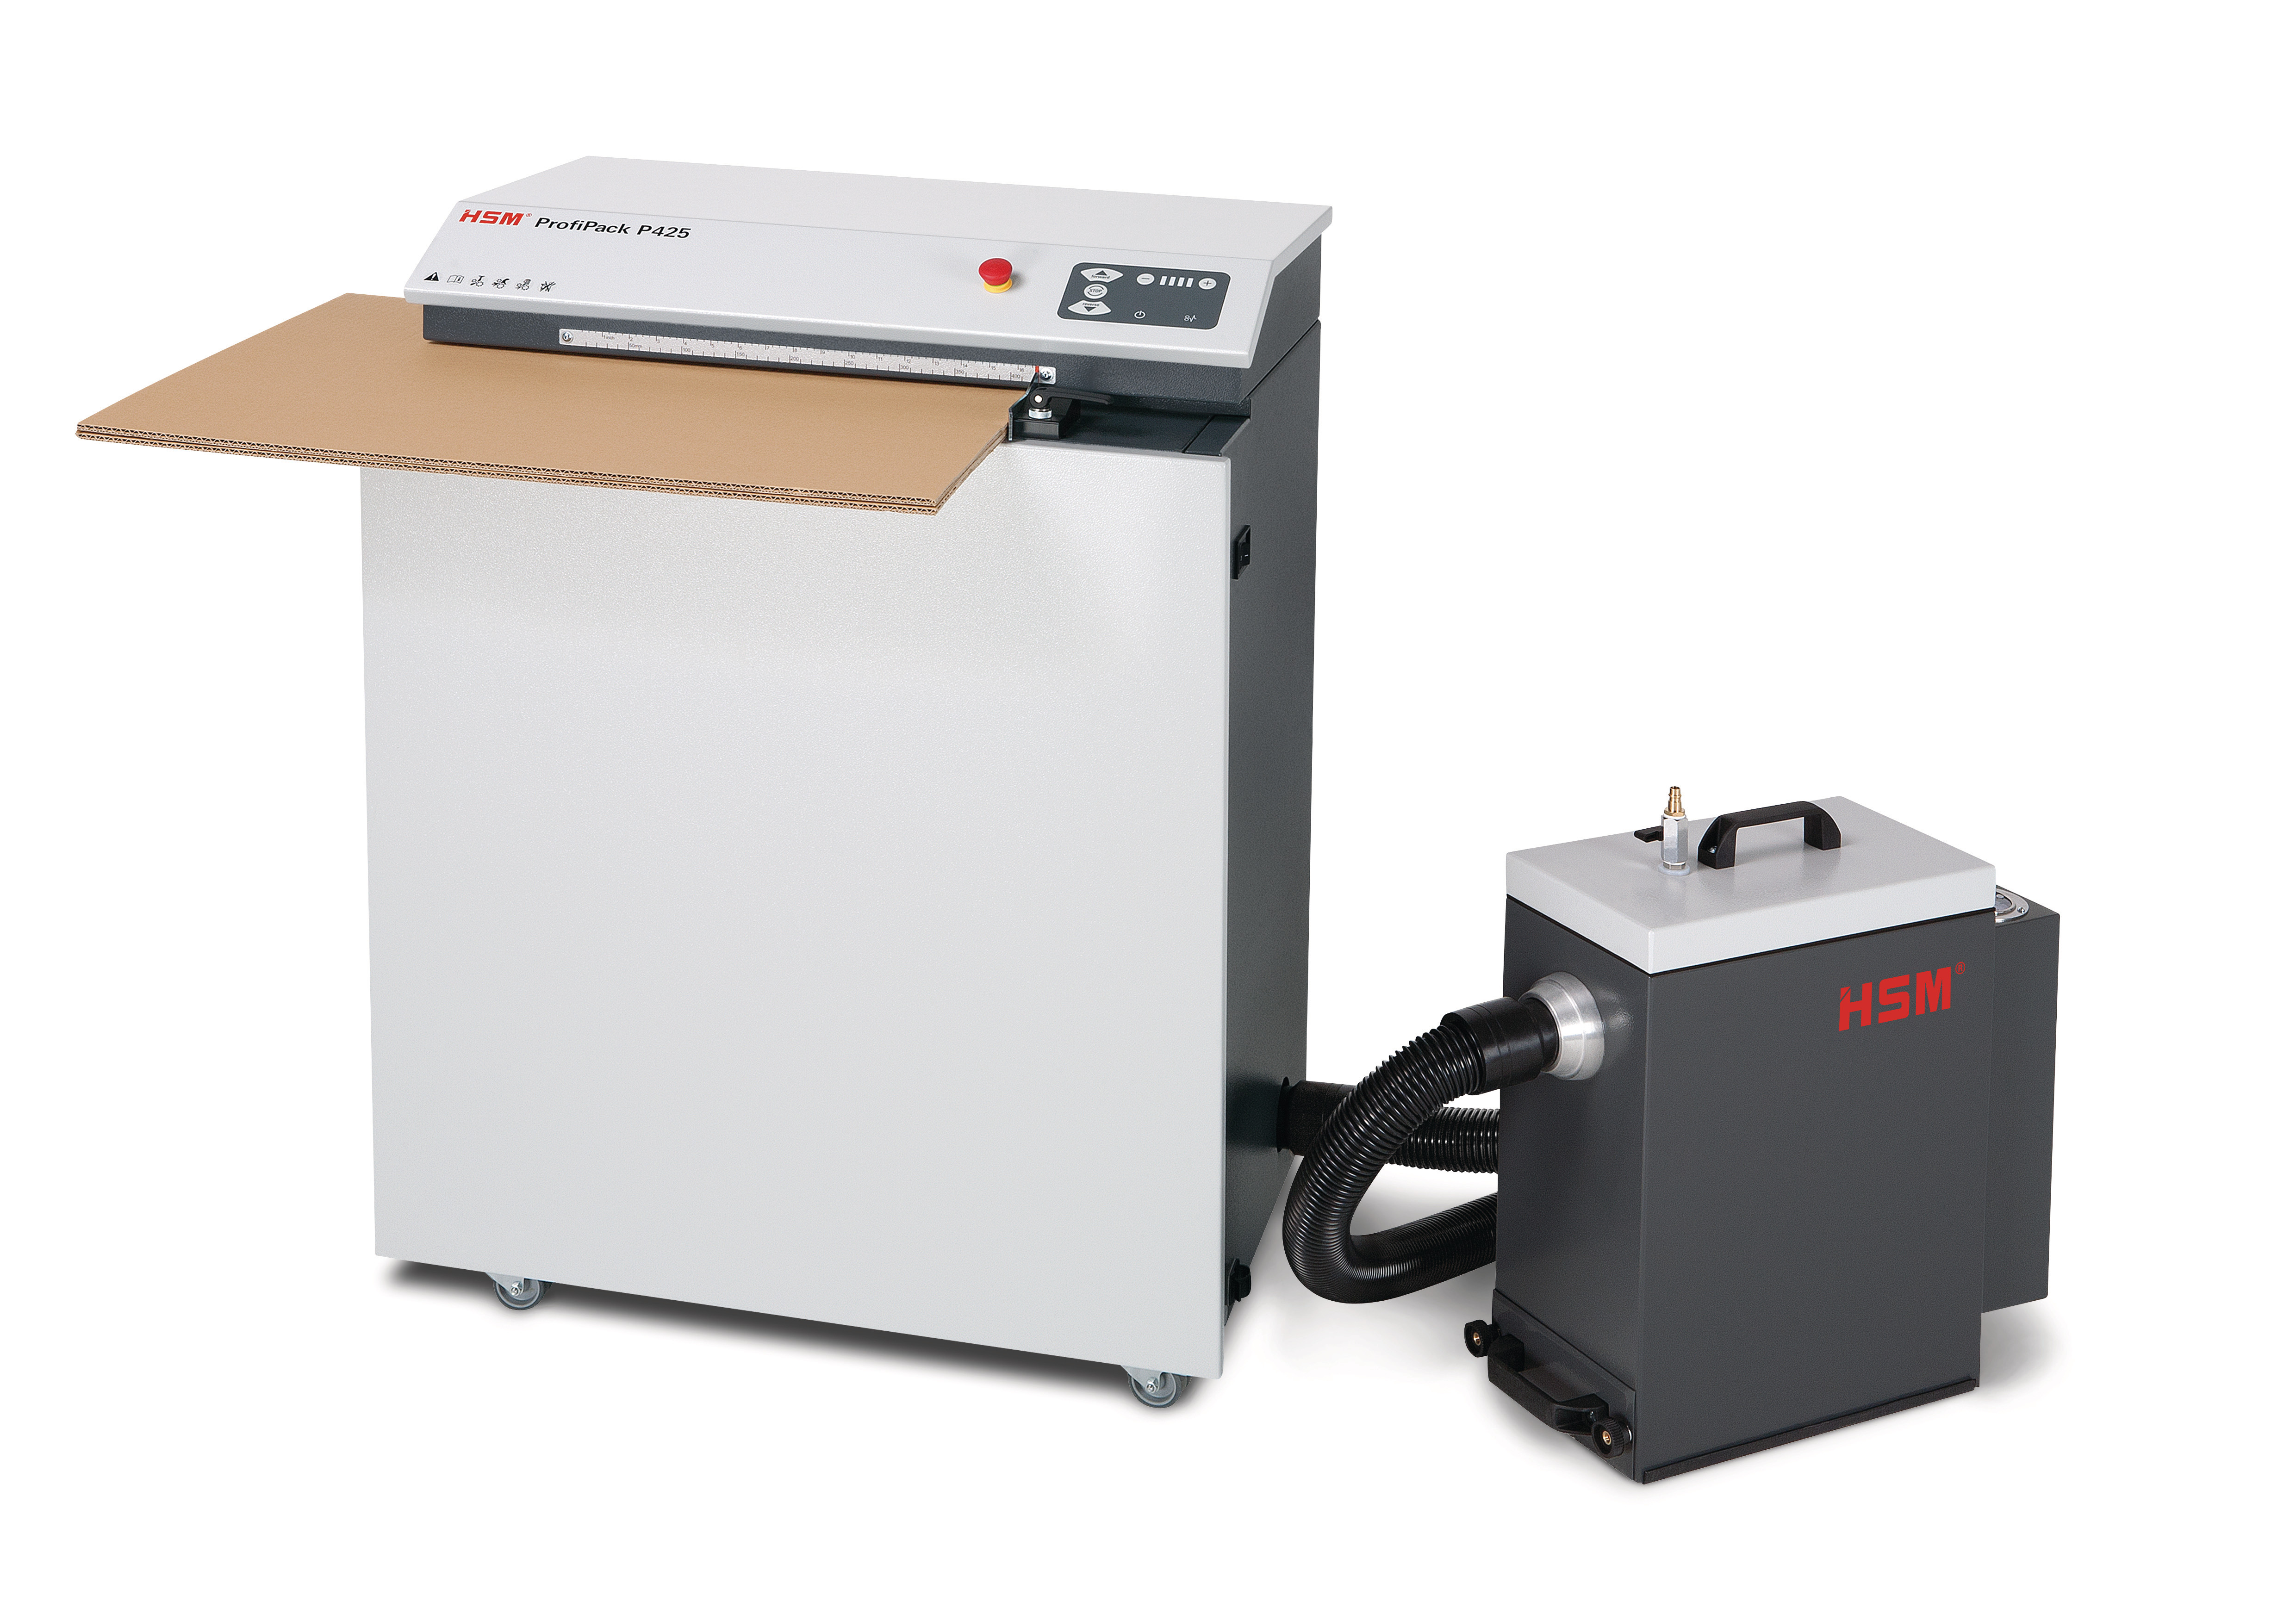 HSM Machine de calage d'emballage 1533154 ProfiPack P425 - 400V